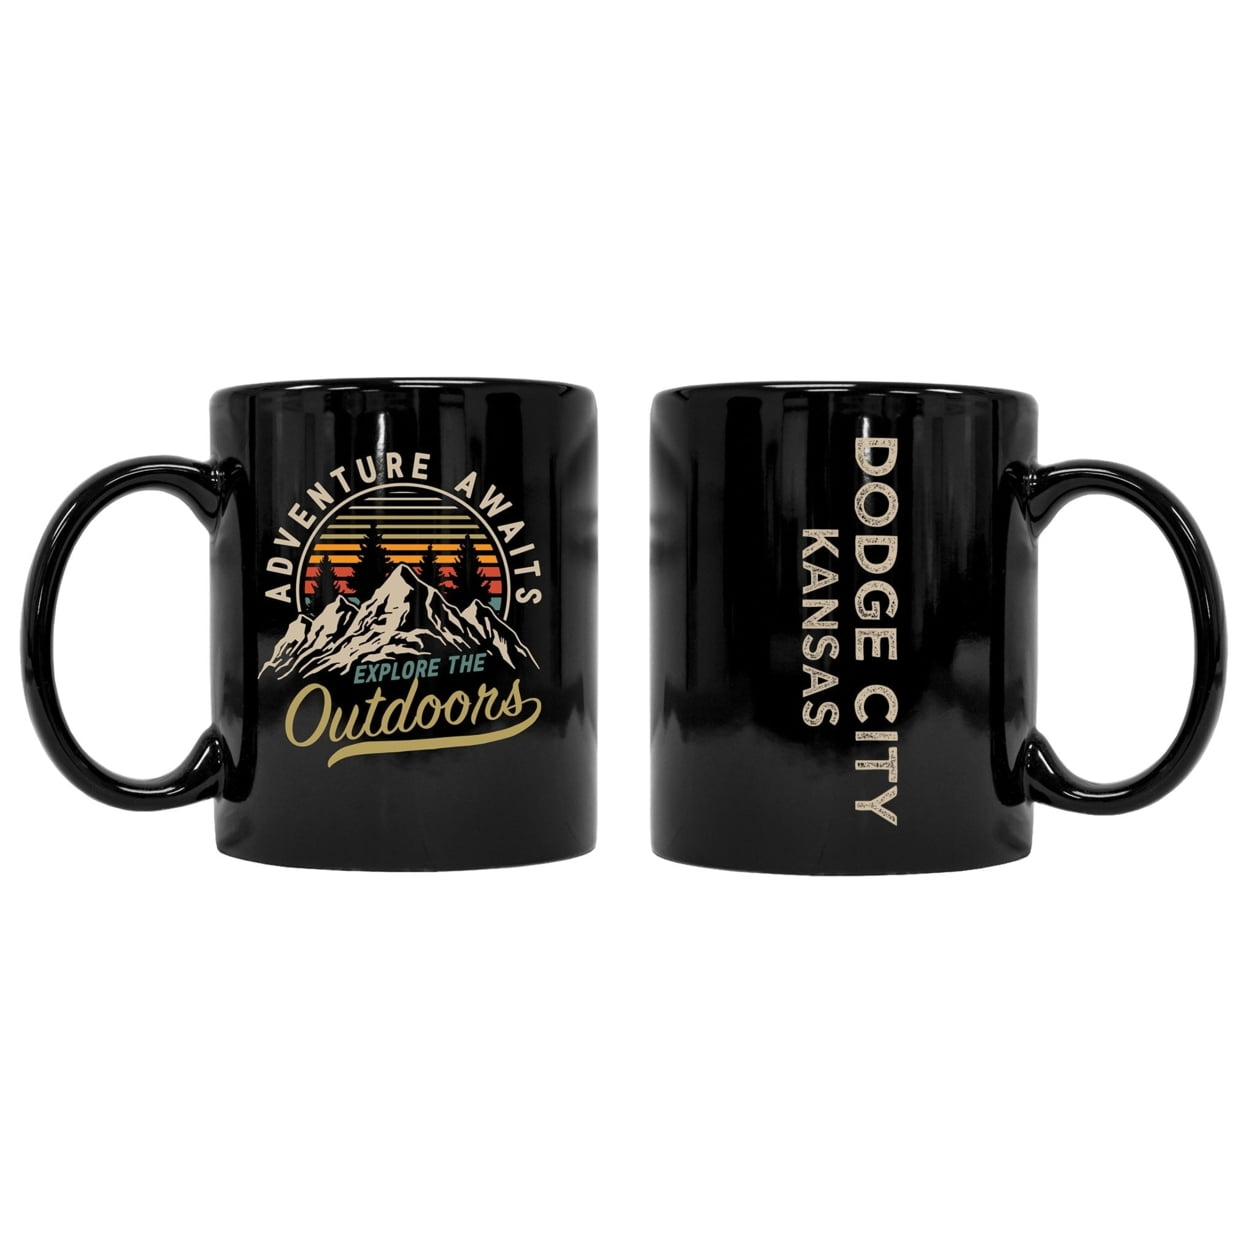 New York Yankees Spirit Coffee Mug 17 oz